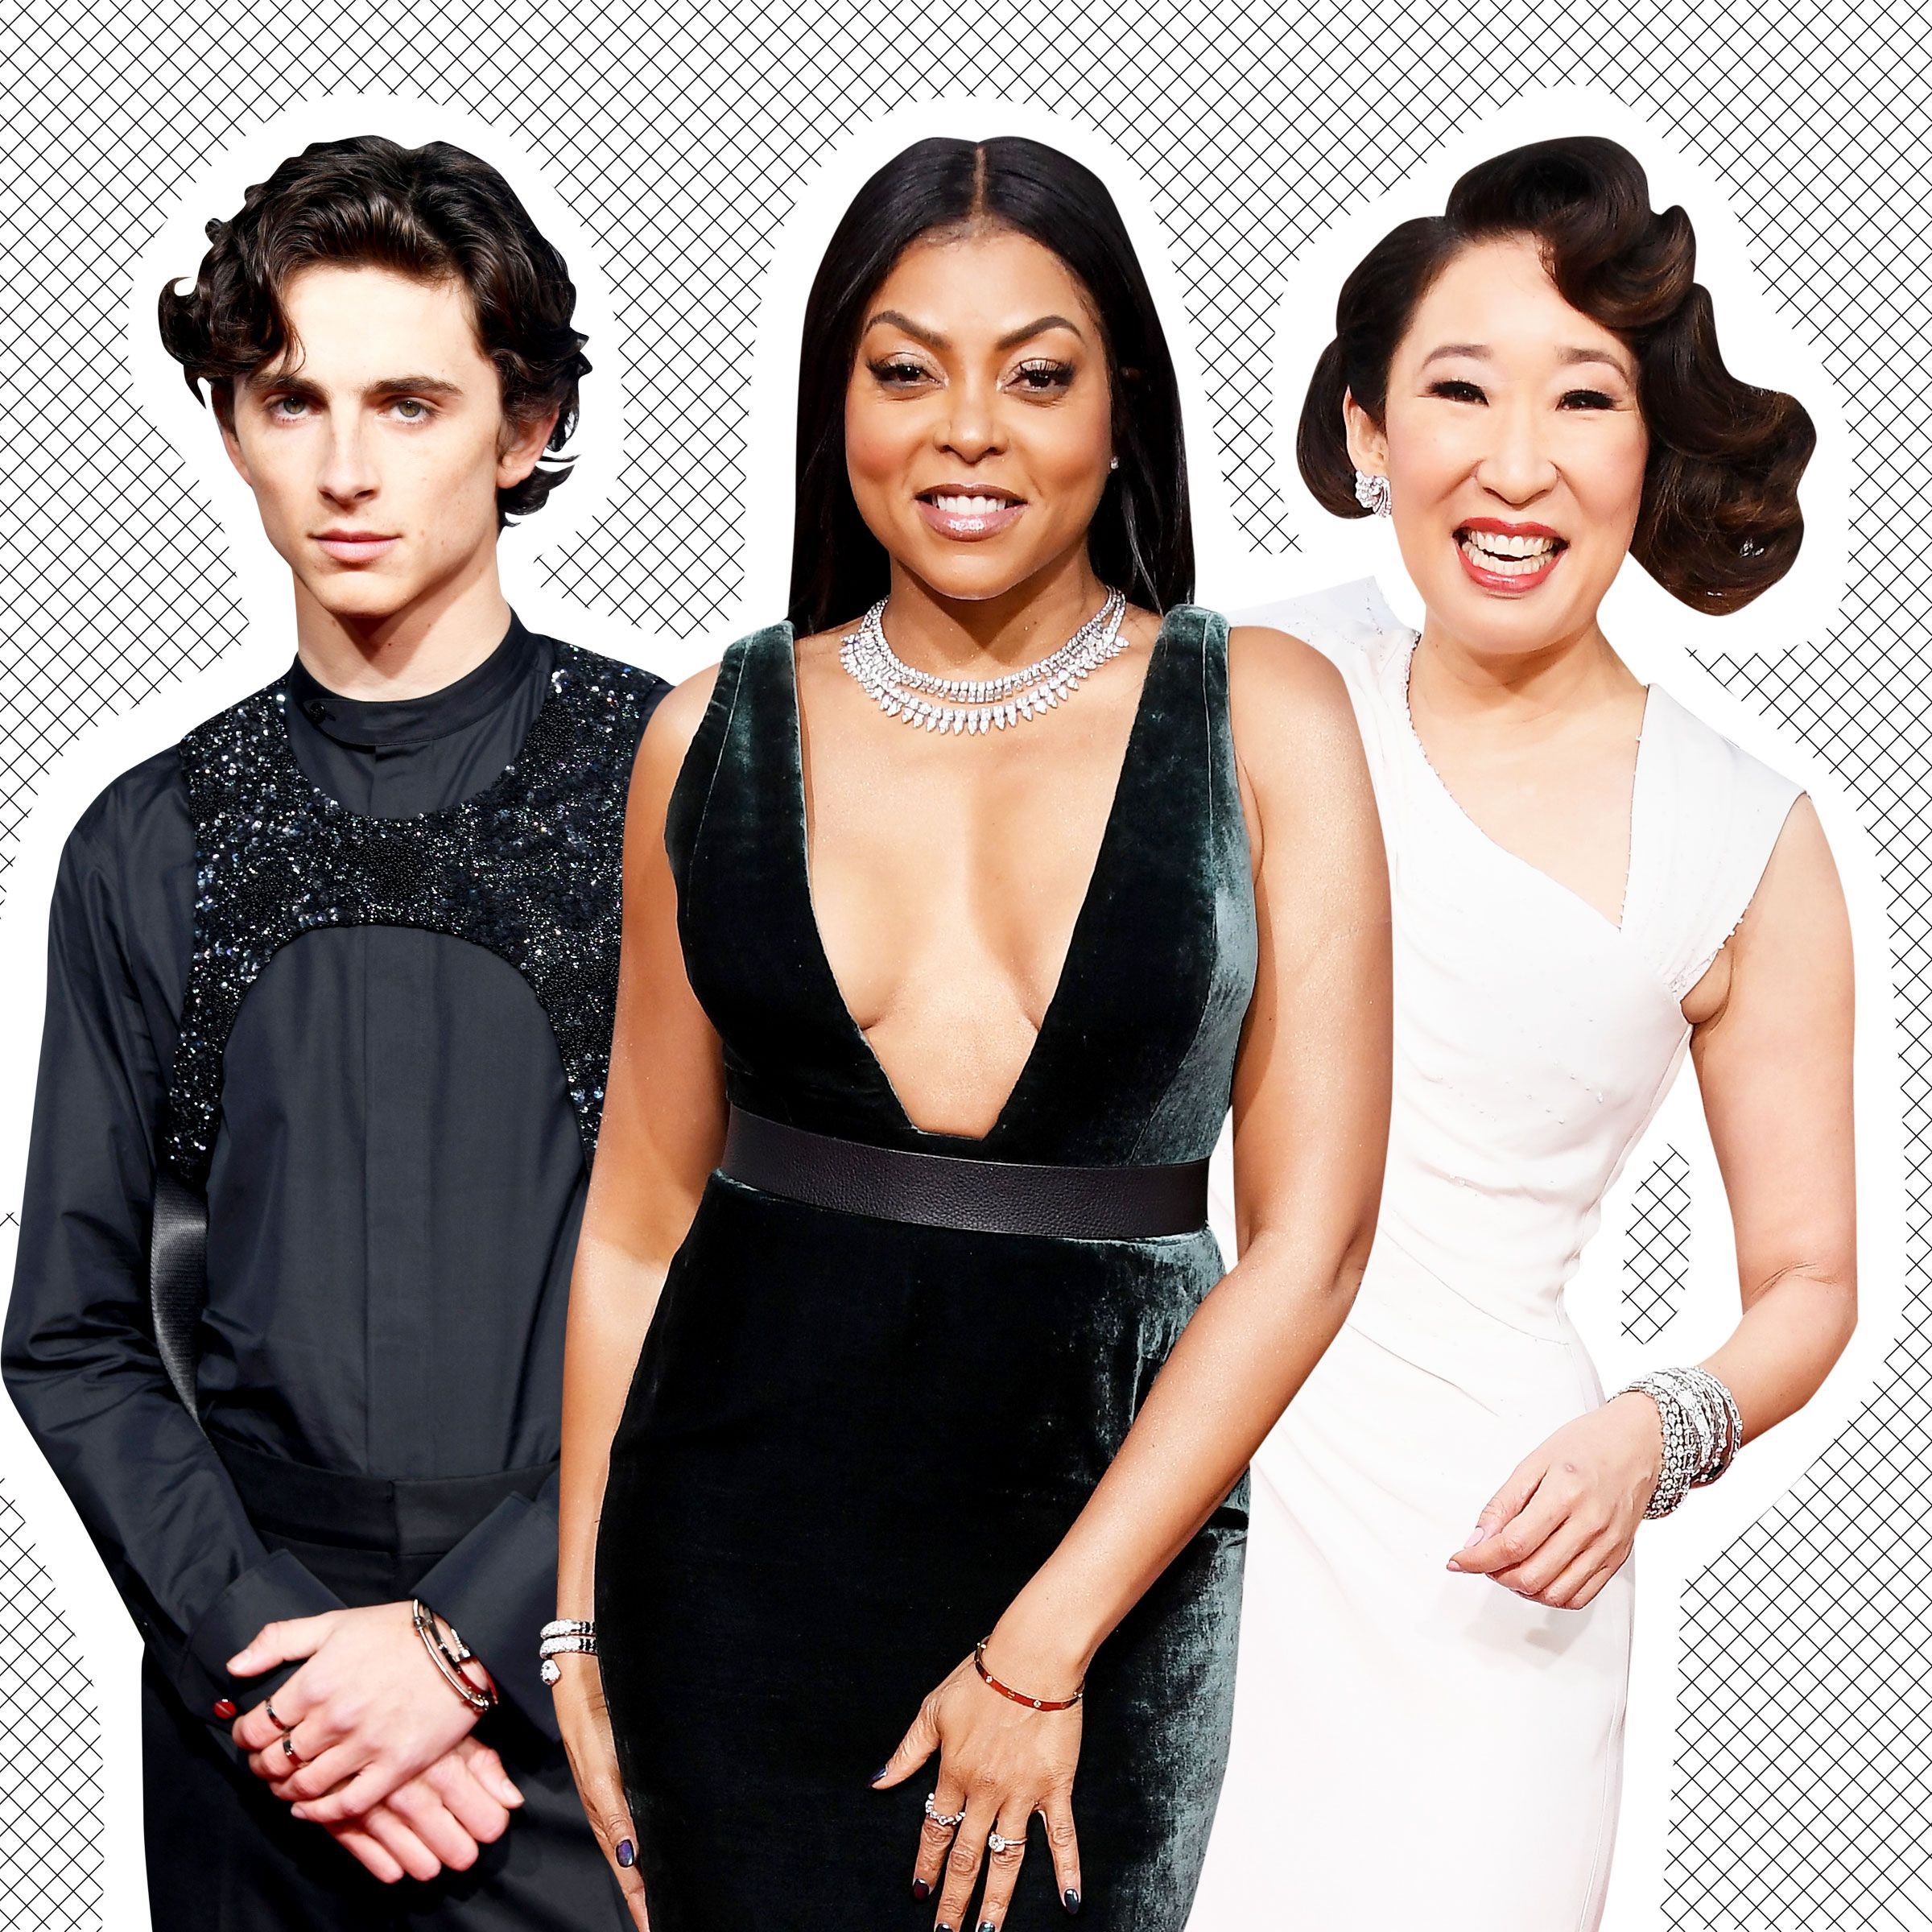 Golden Globes 2019: Red Carpet Fashion & Best Dressed